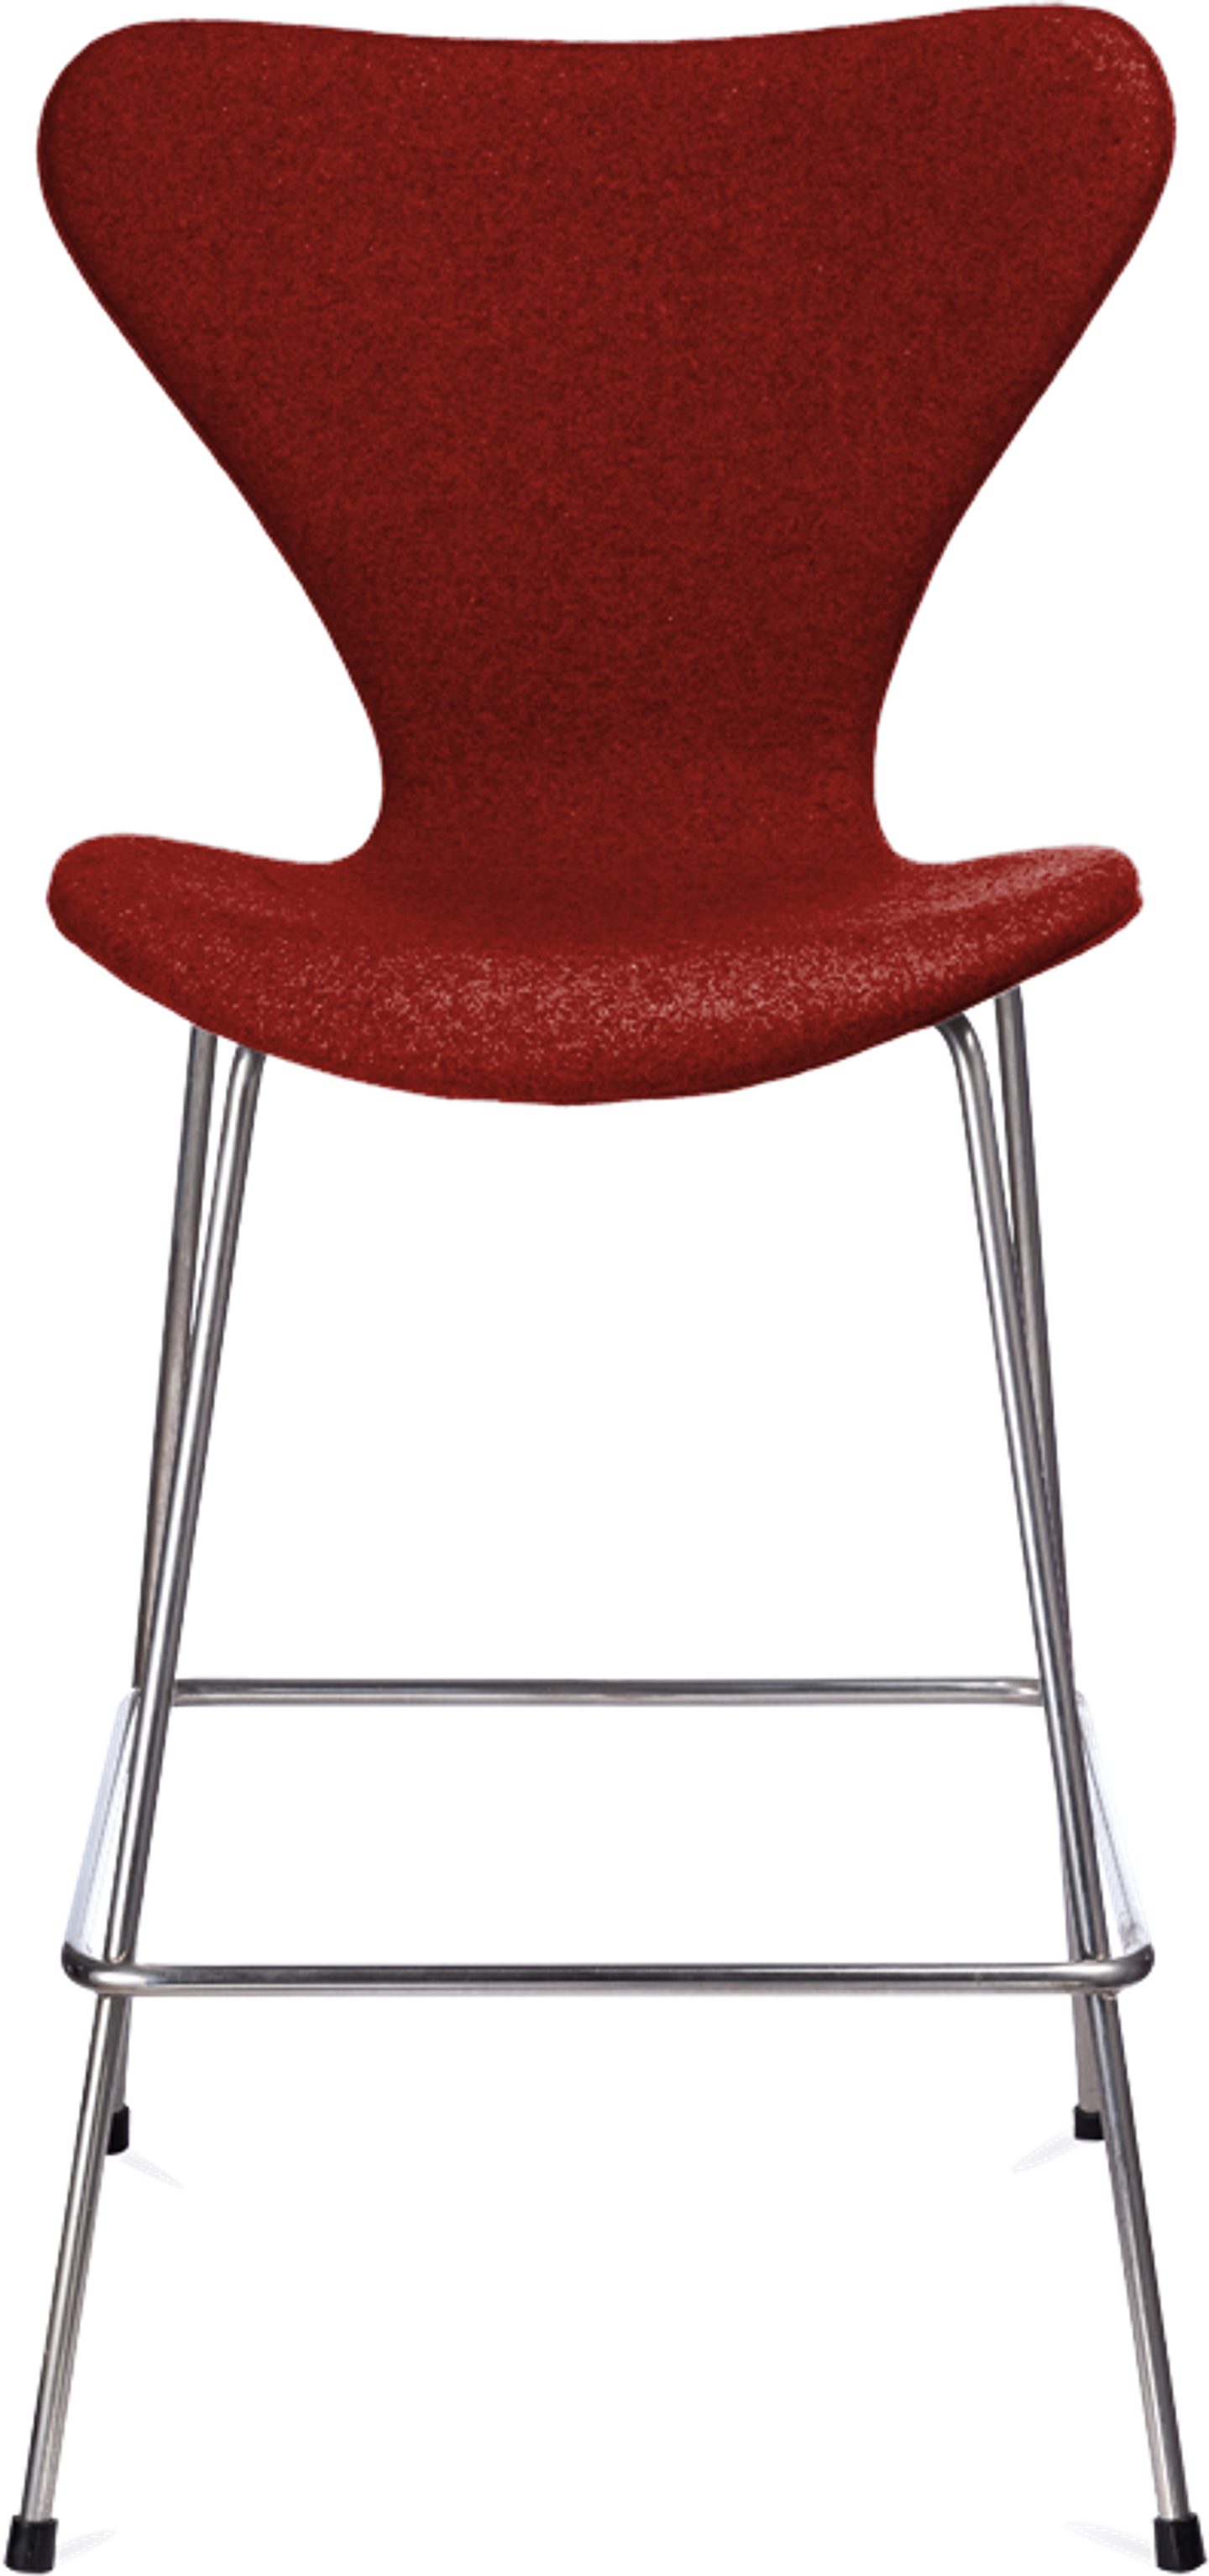 Series 7 Barstool Upholstered Red image.